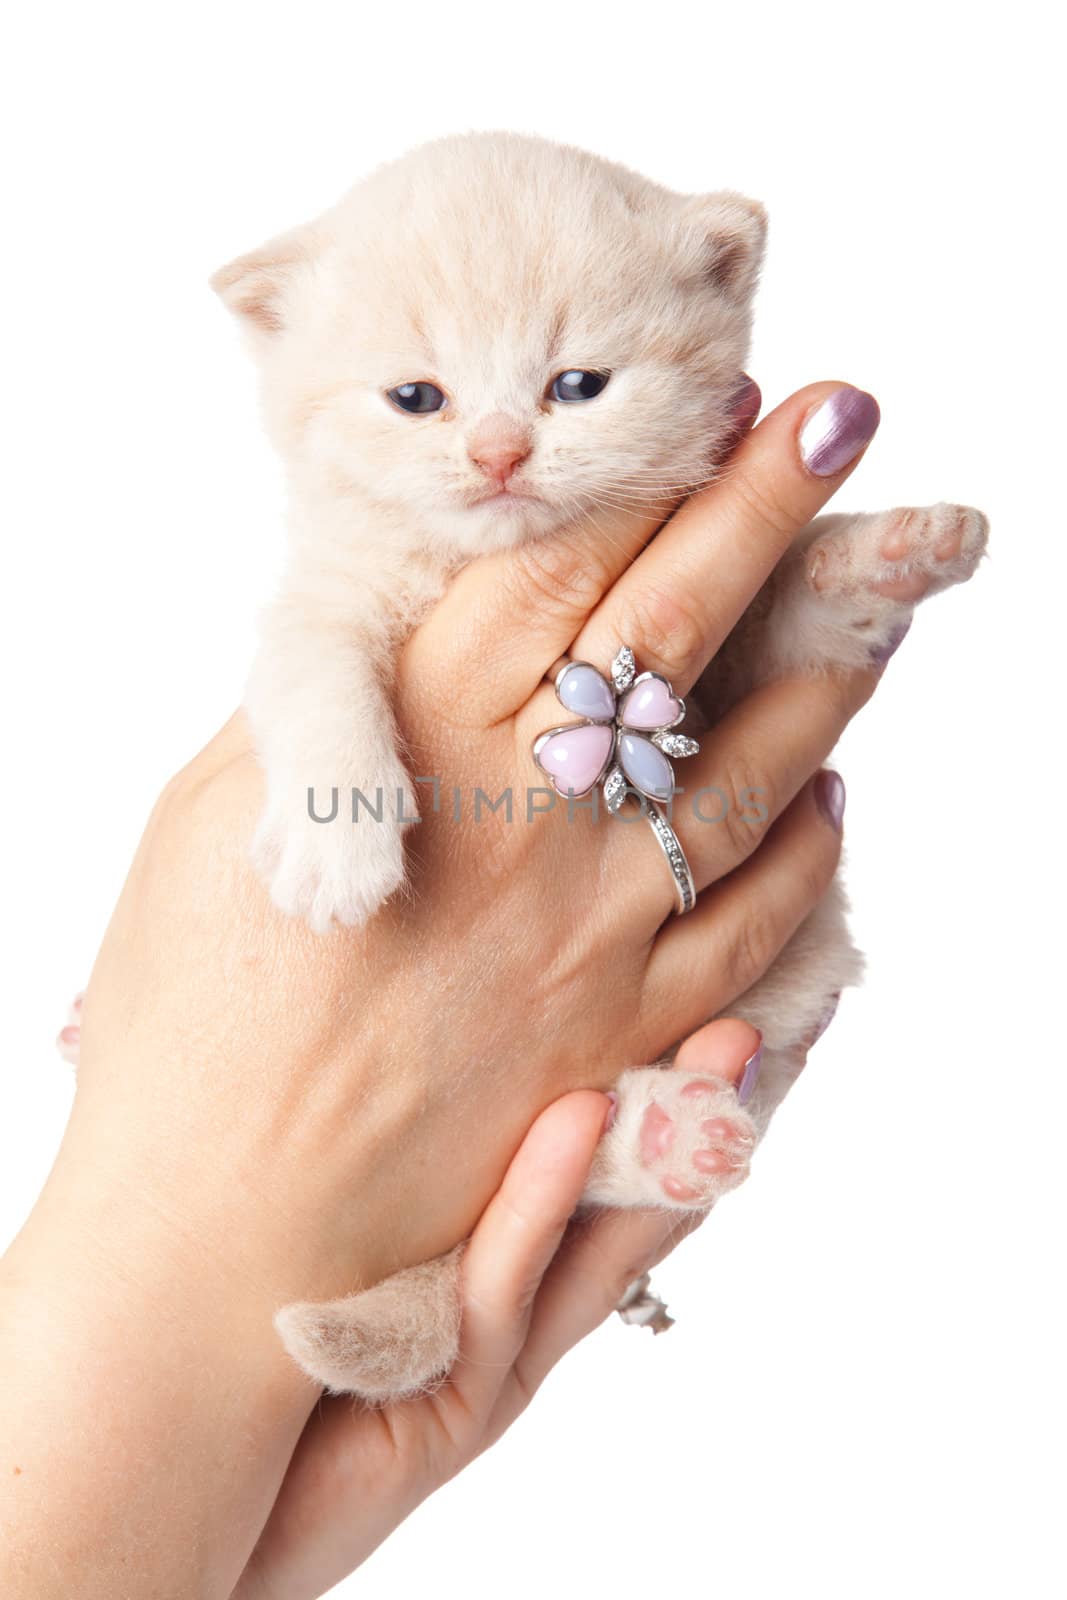 kitten on a white background. small kitten on a hand by ewastudio